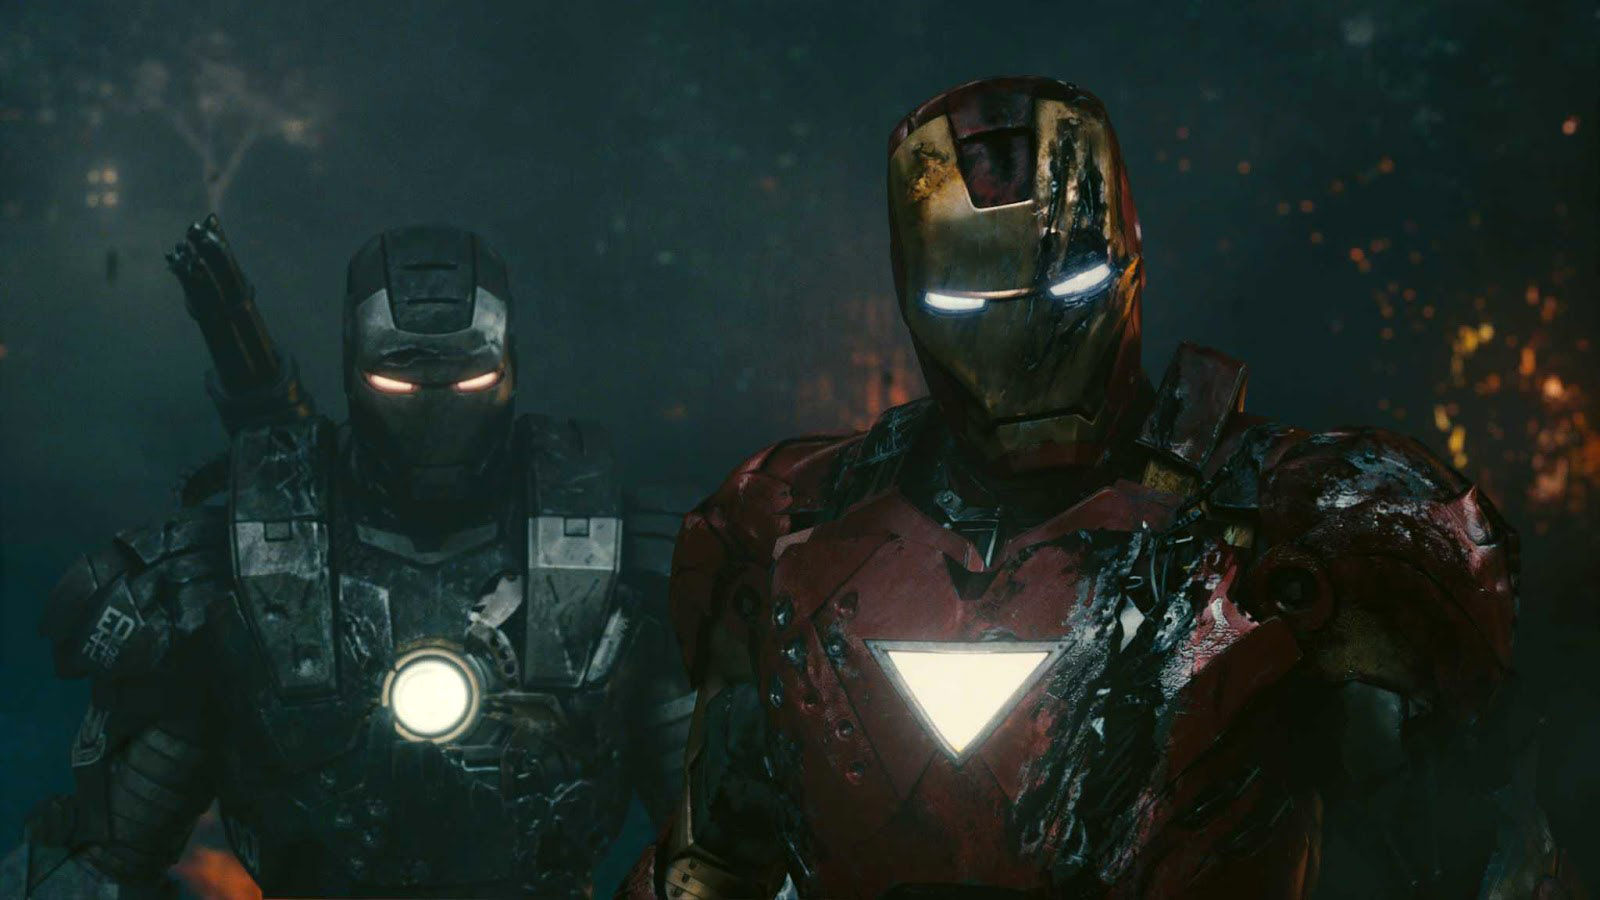 Iron Man 2 HD Wallpapers